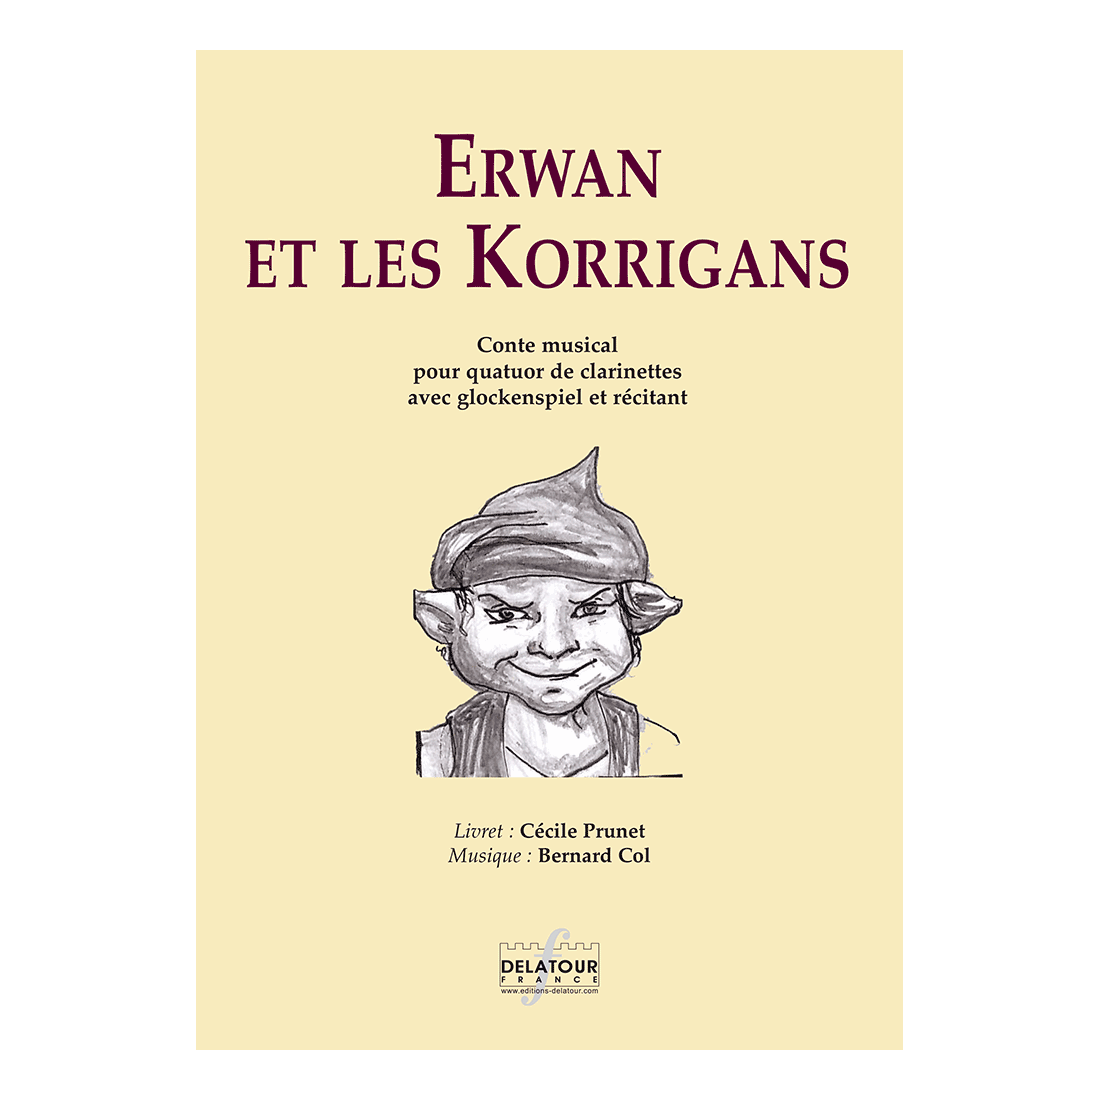 Erwan et les Korrigans - Musical tale for clarinet quartet, narrator and glockenspiel